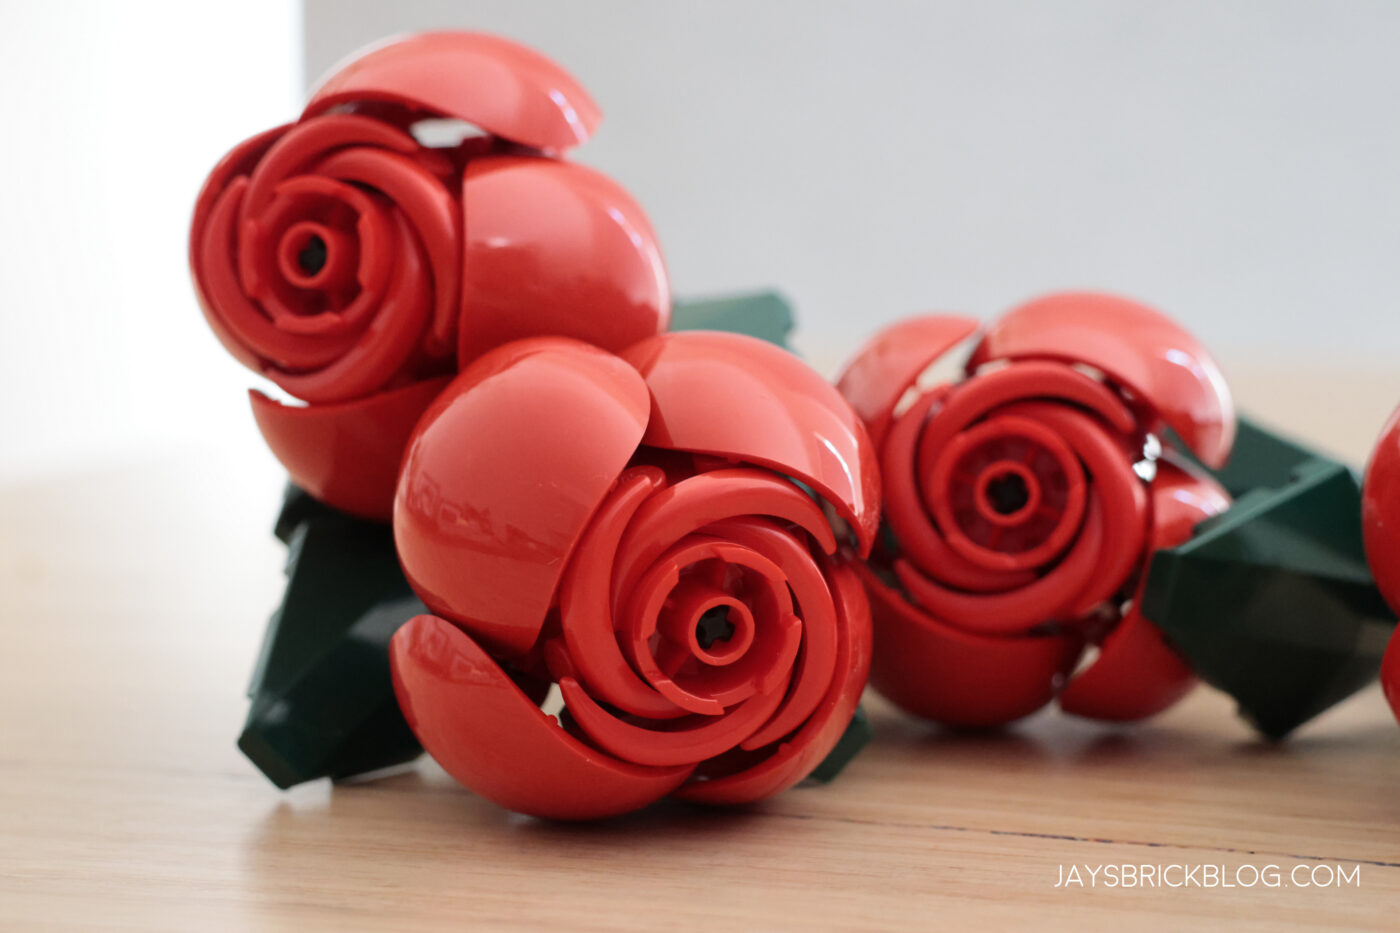 new lego flowers revealed! A dozen red roses 🌹 #lego #flowers